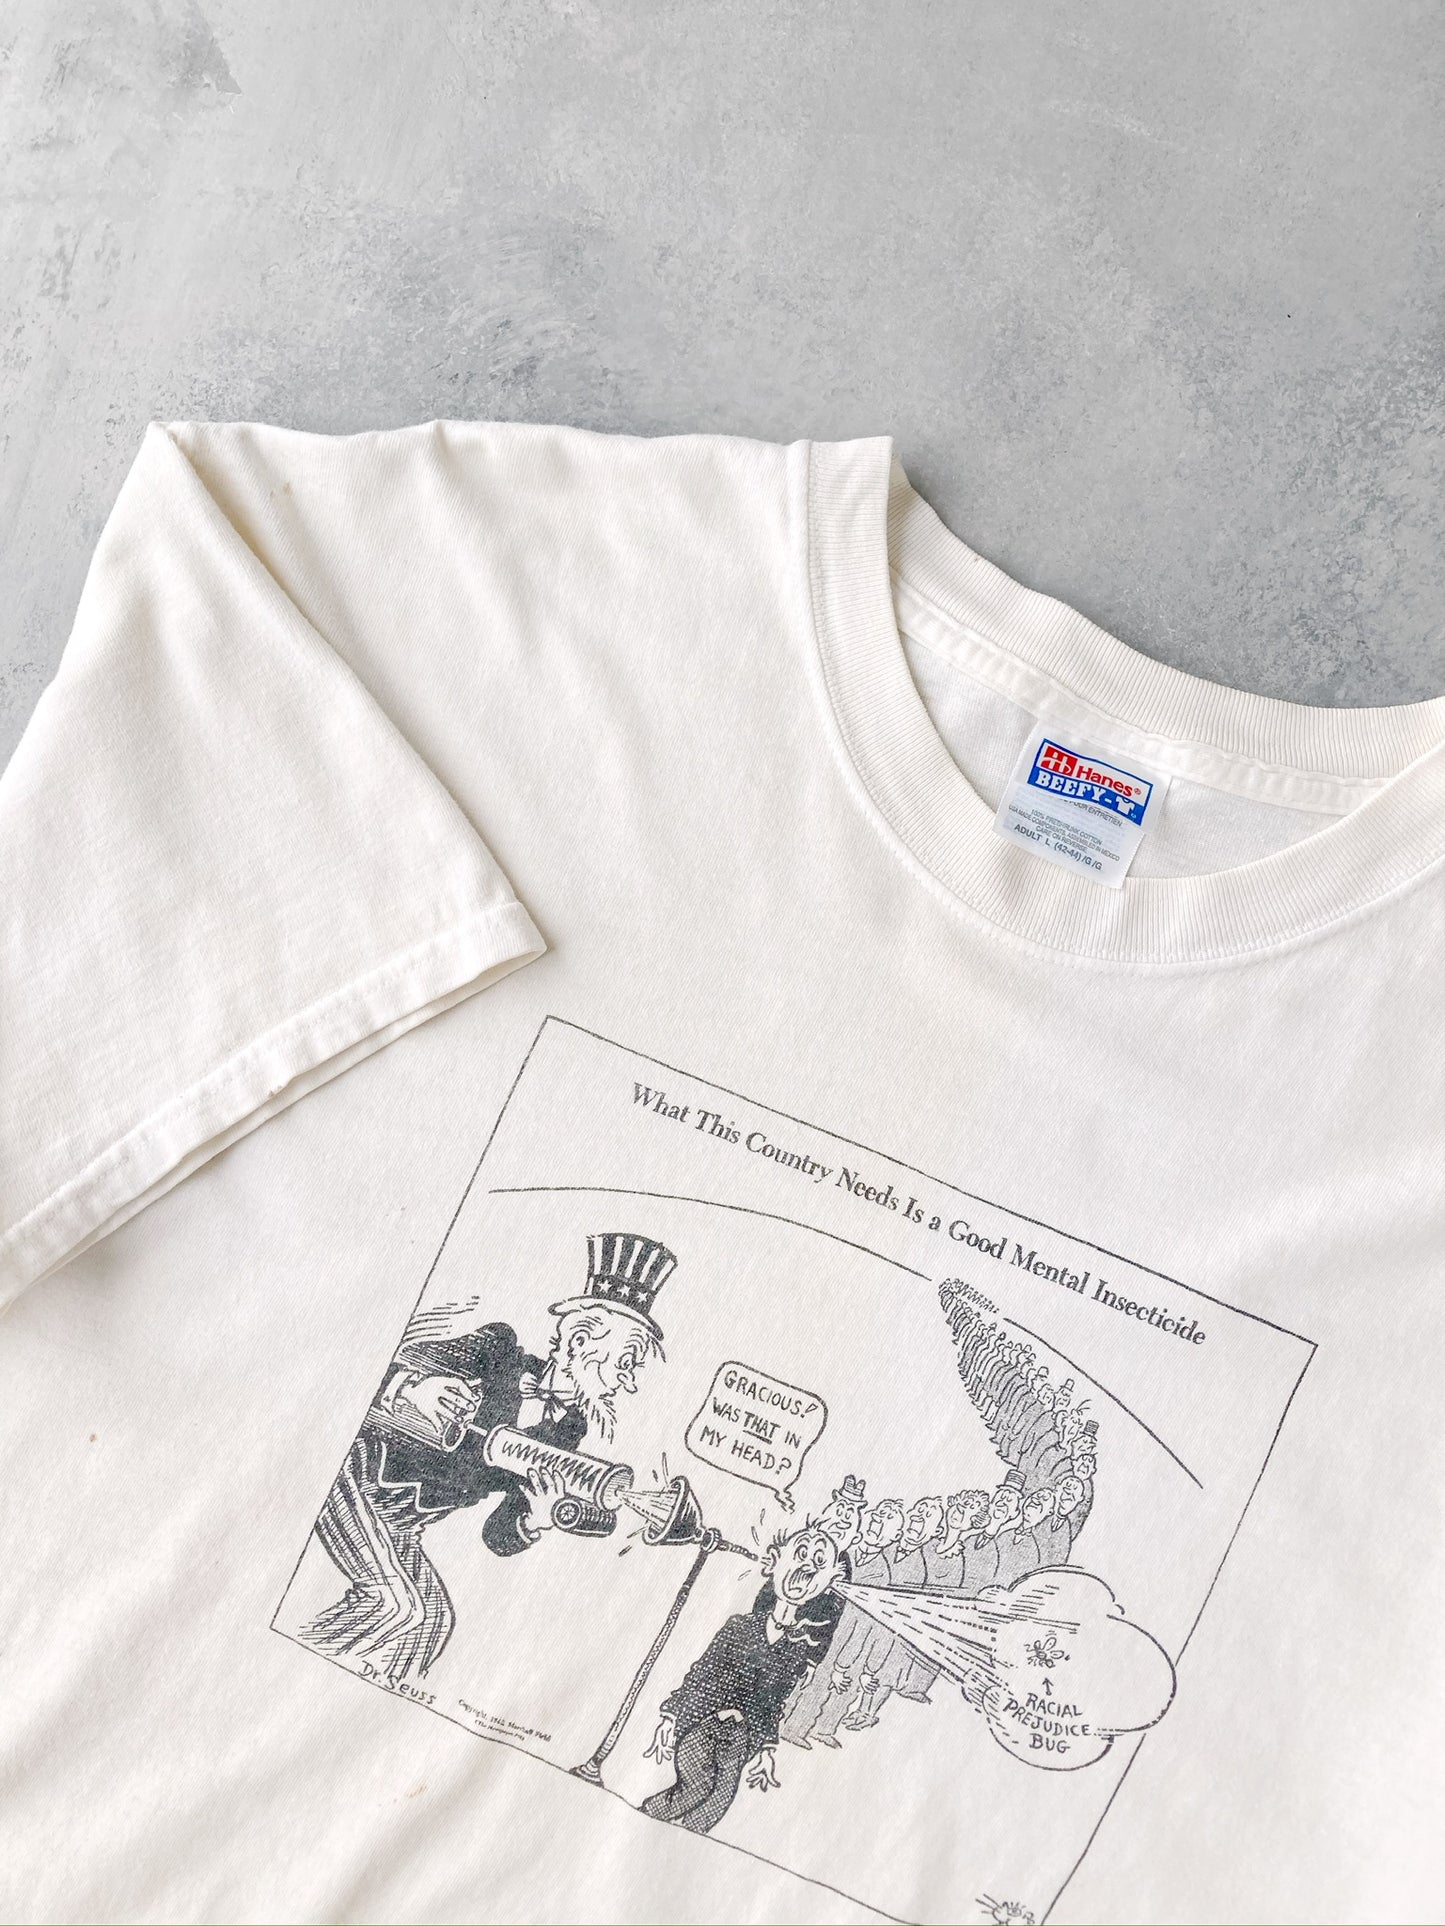 Dr. Seuss Goes to War T-Shirt '99 - Large